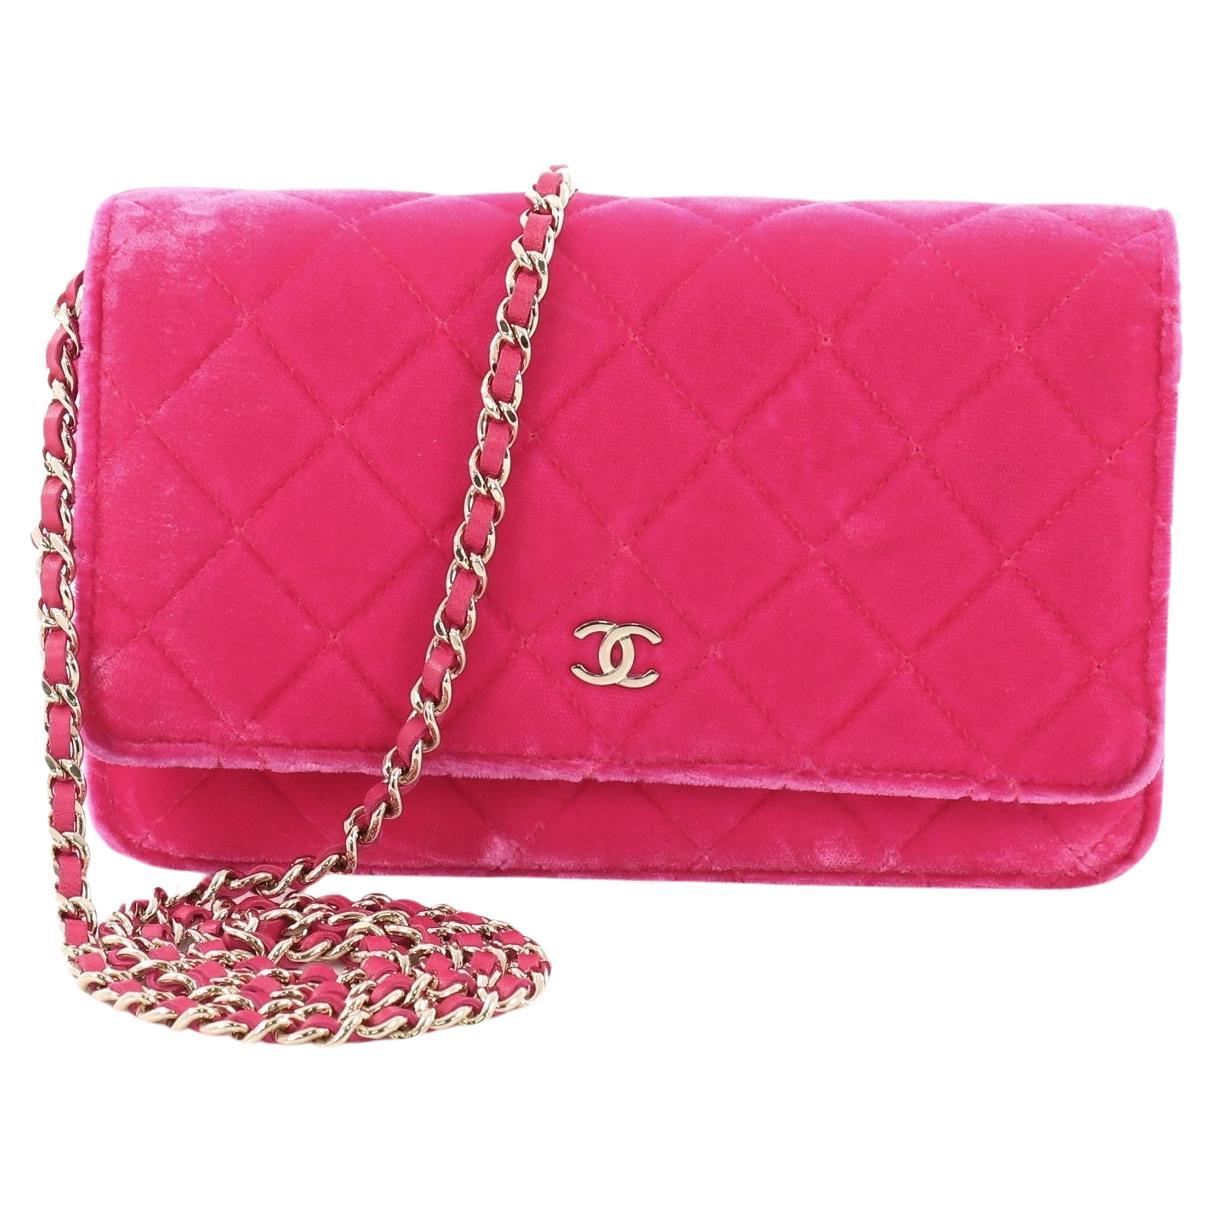 Chanel 2014 Velvet Neon Pink Wallet on Chain WOC Crossbody Flap Bag